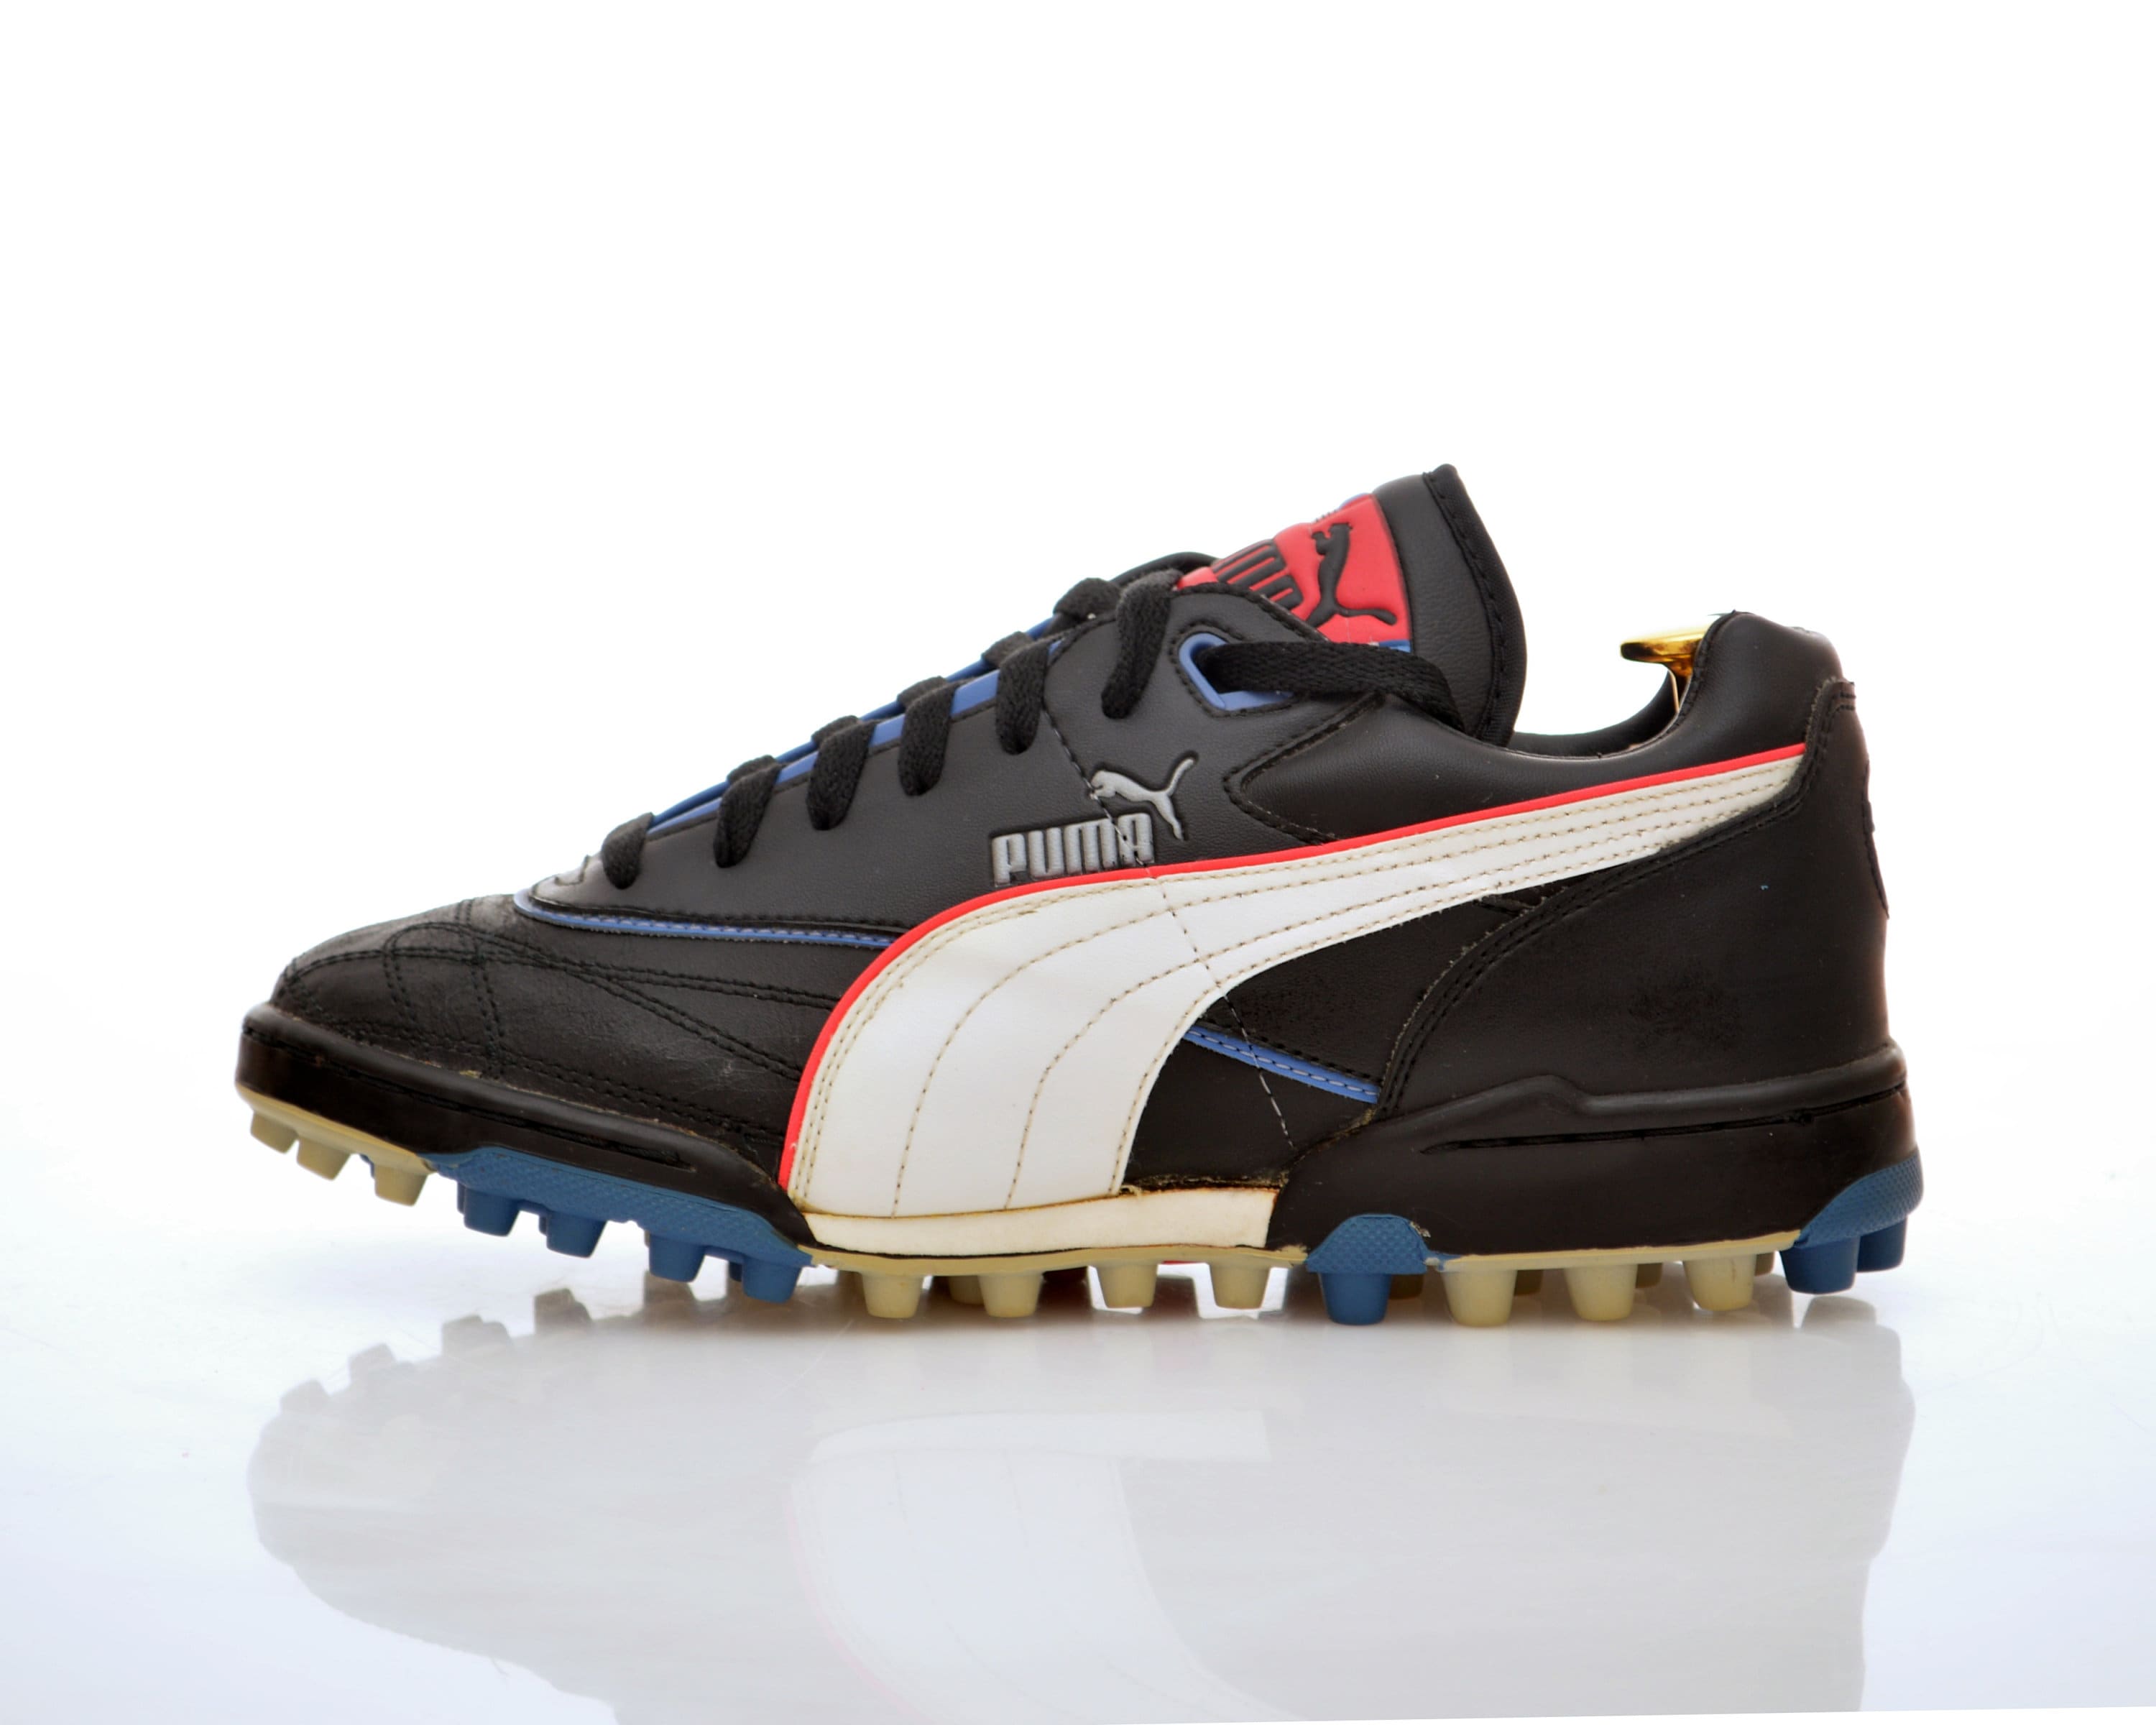 puma astro turf football boots